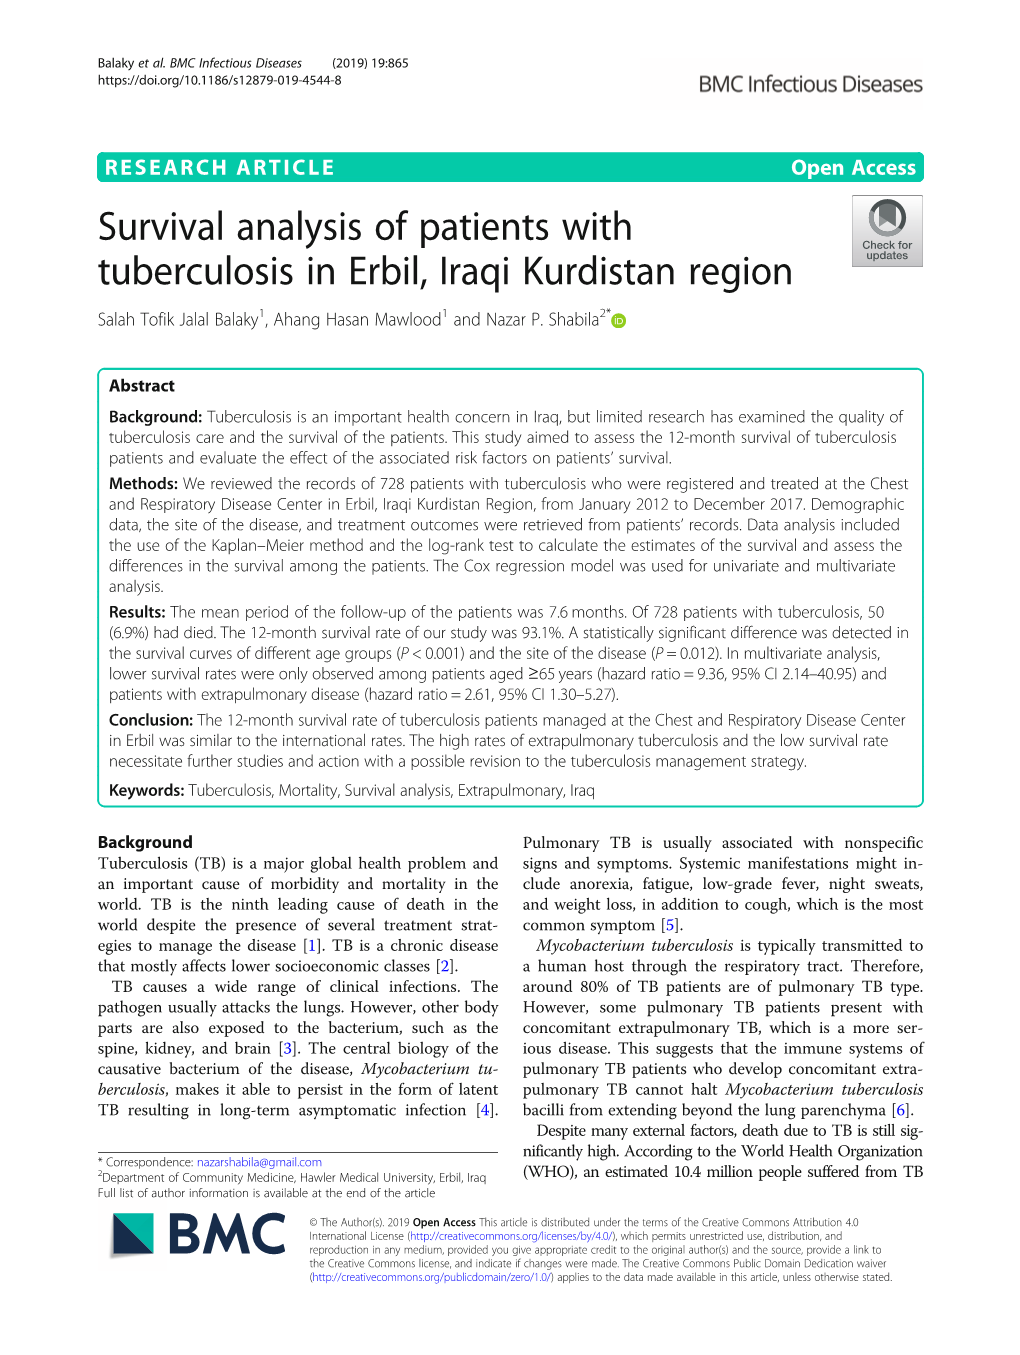 Survival Analysis of Patients with Tuberculosis in Erbil, Iraqi Kurdistan Region Salah Tofik Jalal Balaky1, Ahang Hasan Mawlood1 and Nazar P